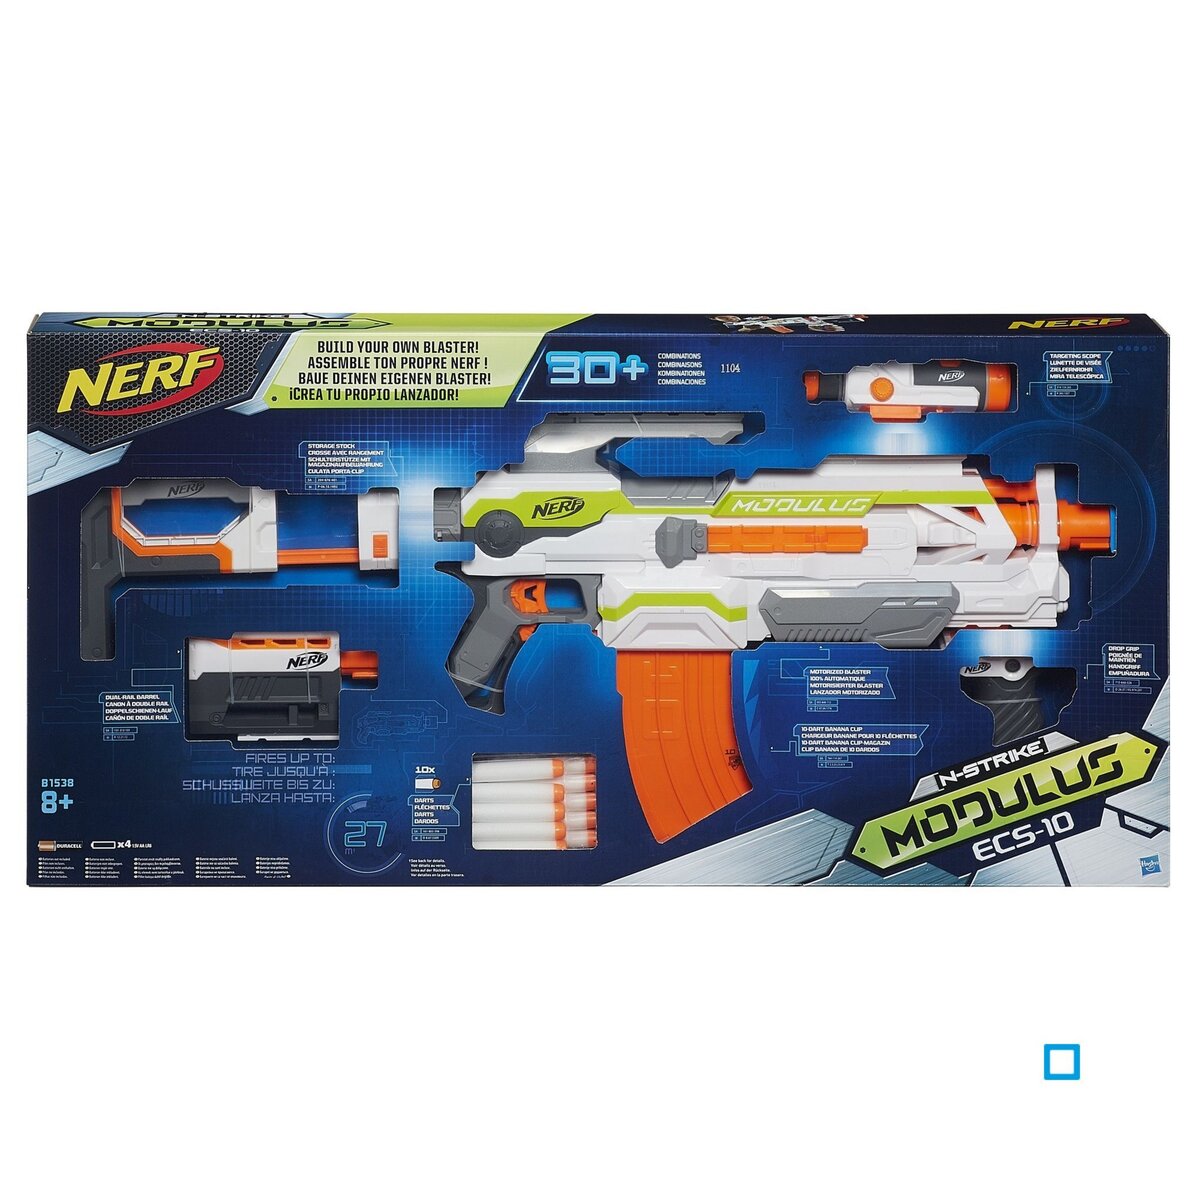 NERF Nerf N-Strike Modulus 